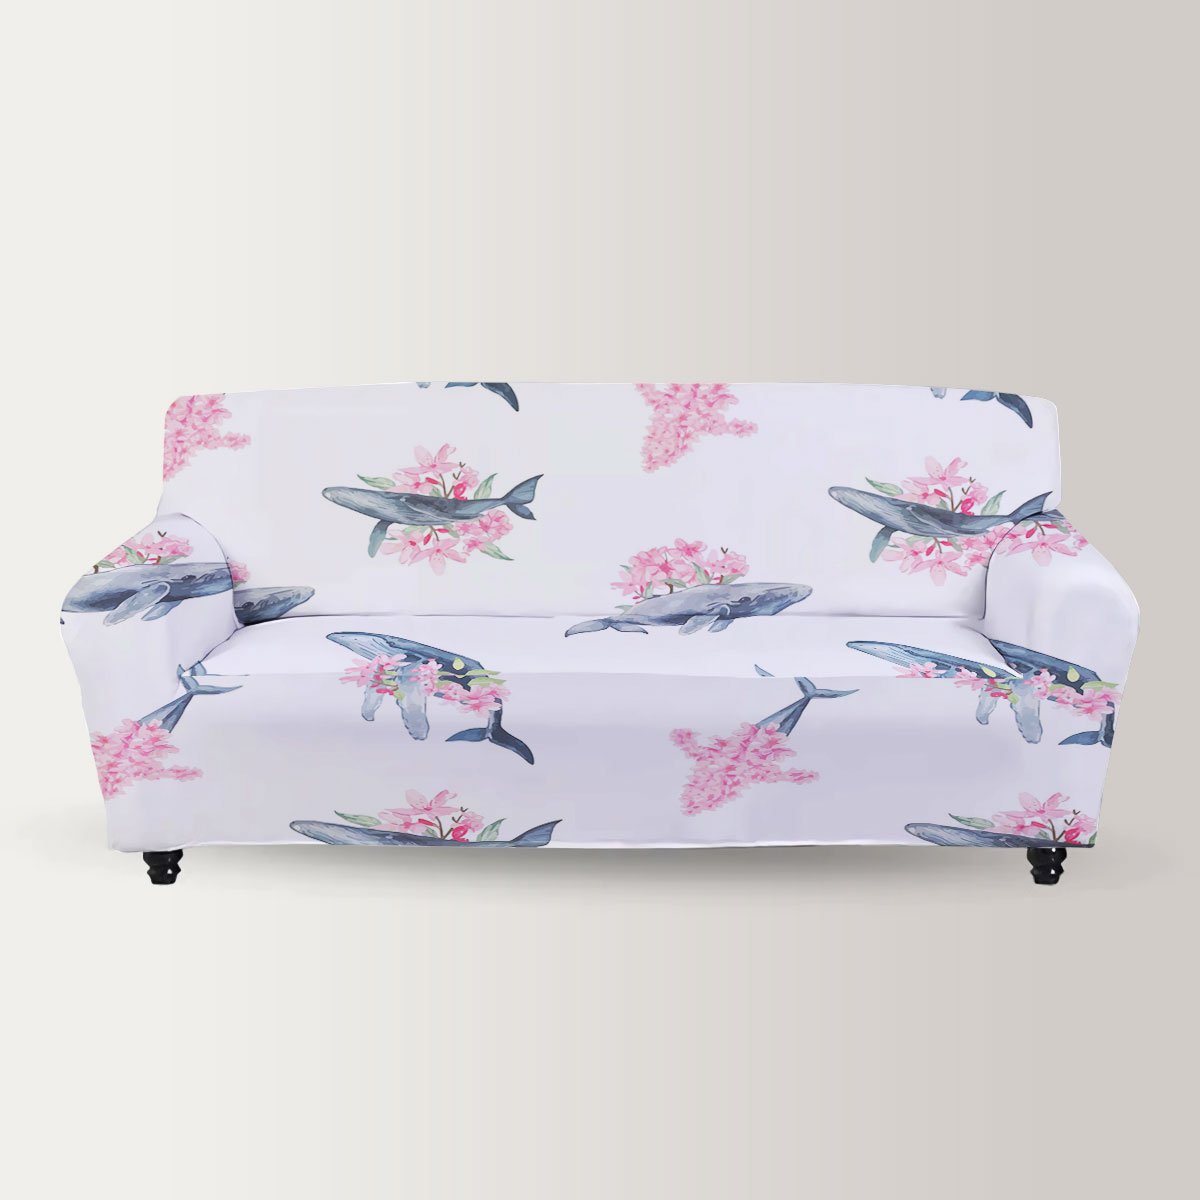 Floral Blue Whale Sofa Cover